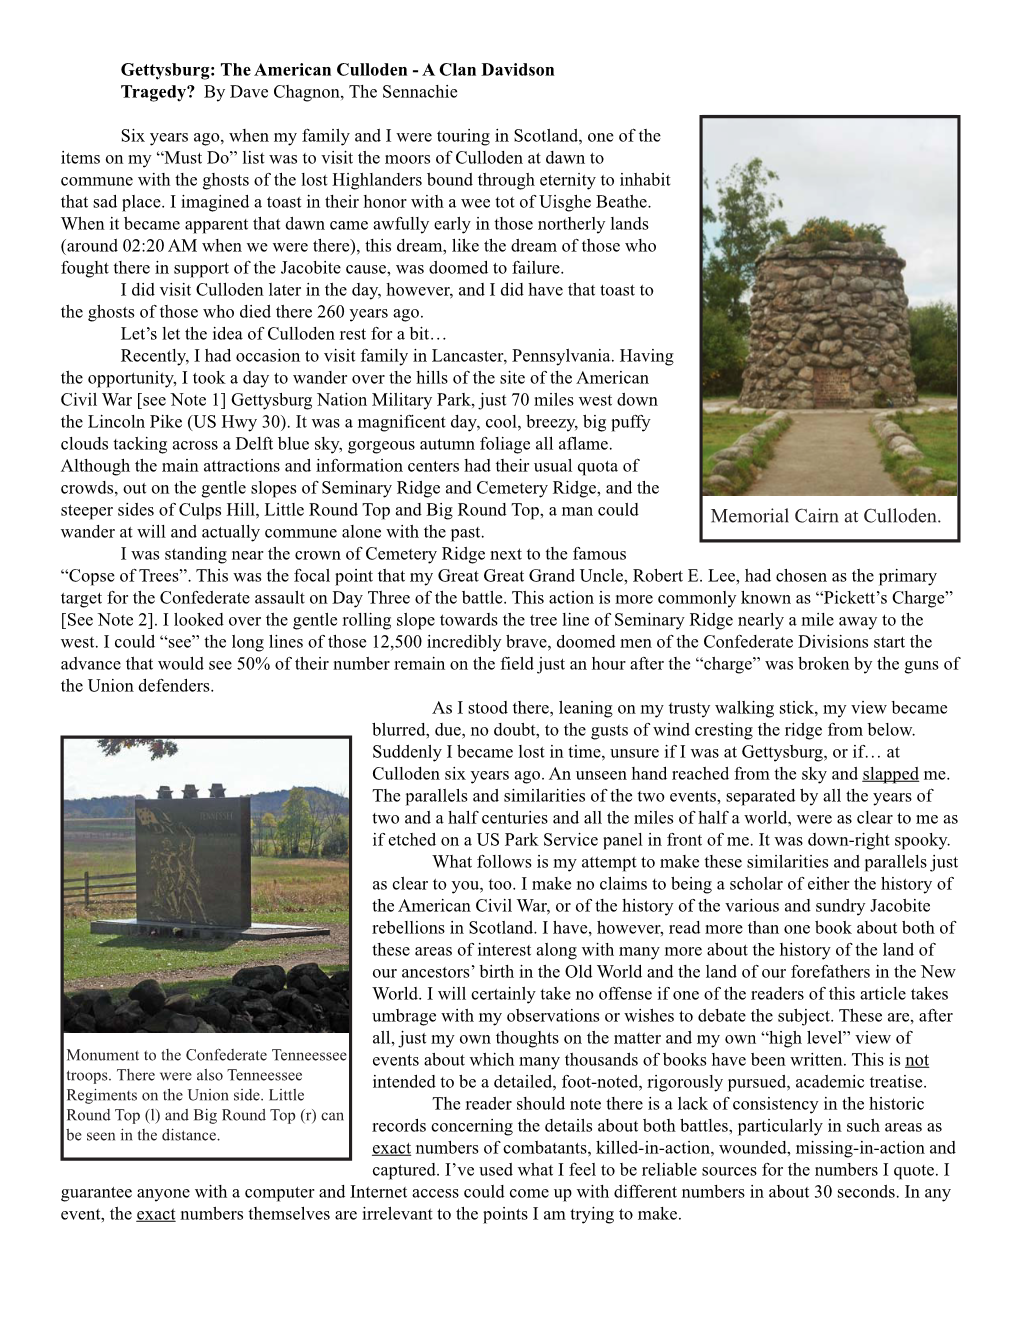 Gettysburg Article W Color Pix.Pmd